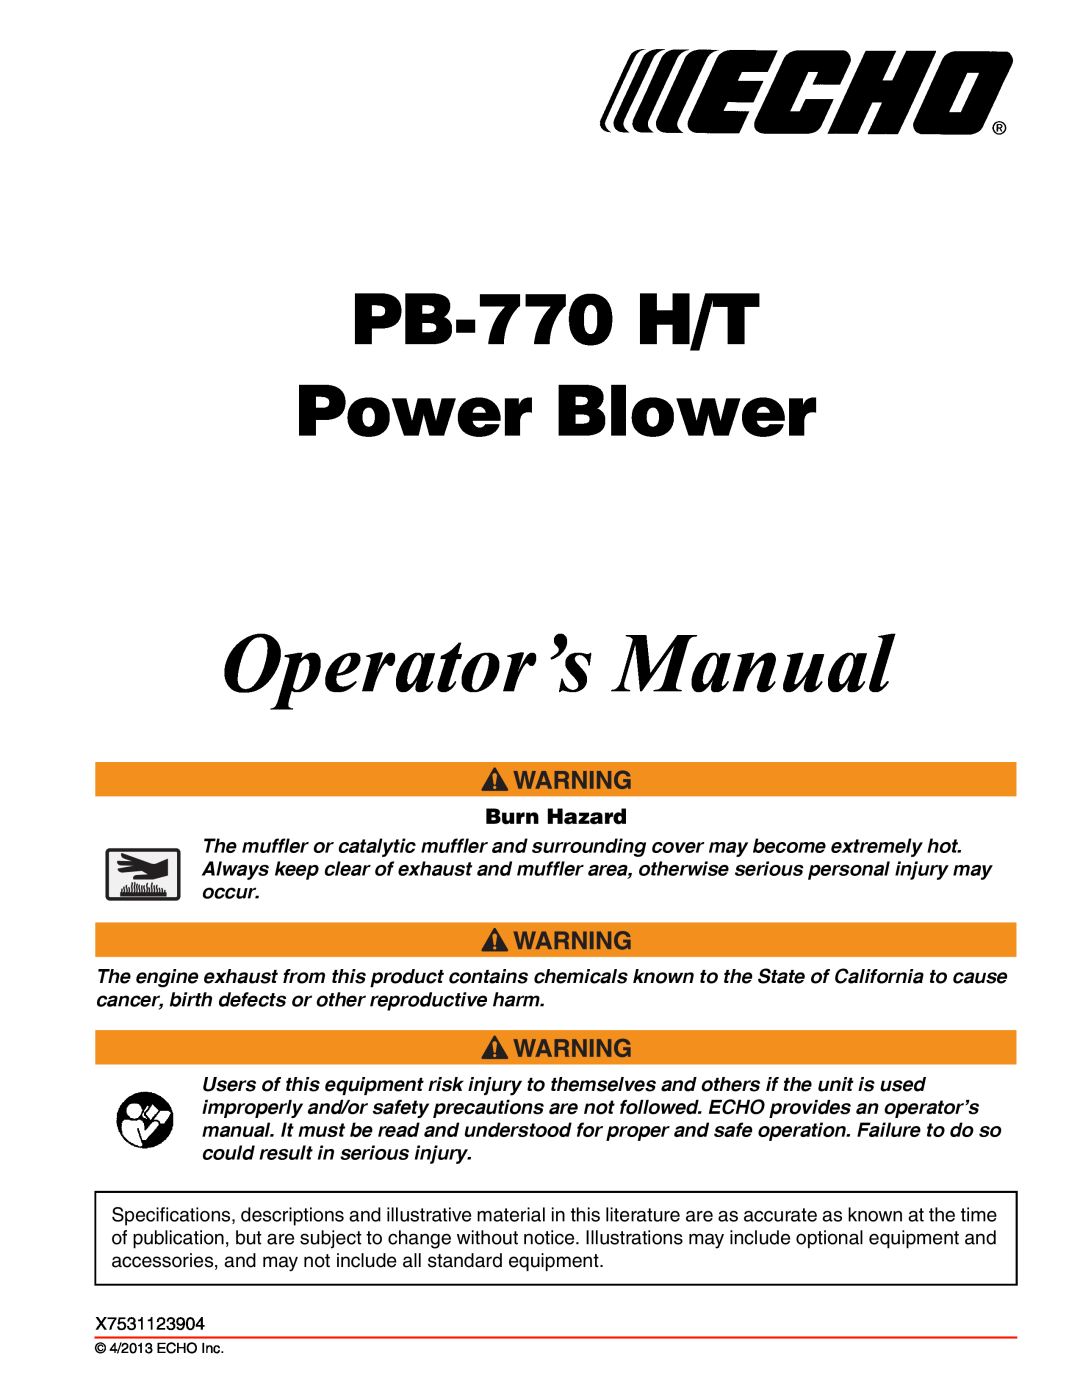 Echo specifications Burn Hazard, Operator’s Manual, PB-770 H/T Power Blower 